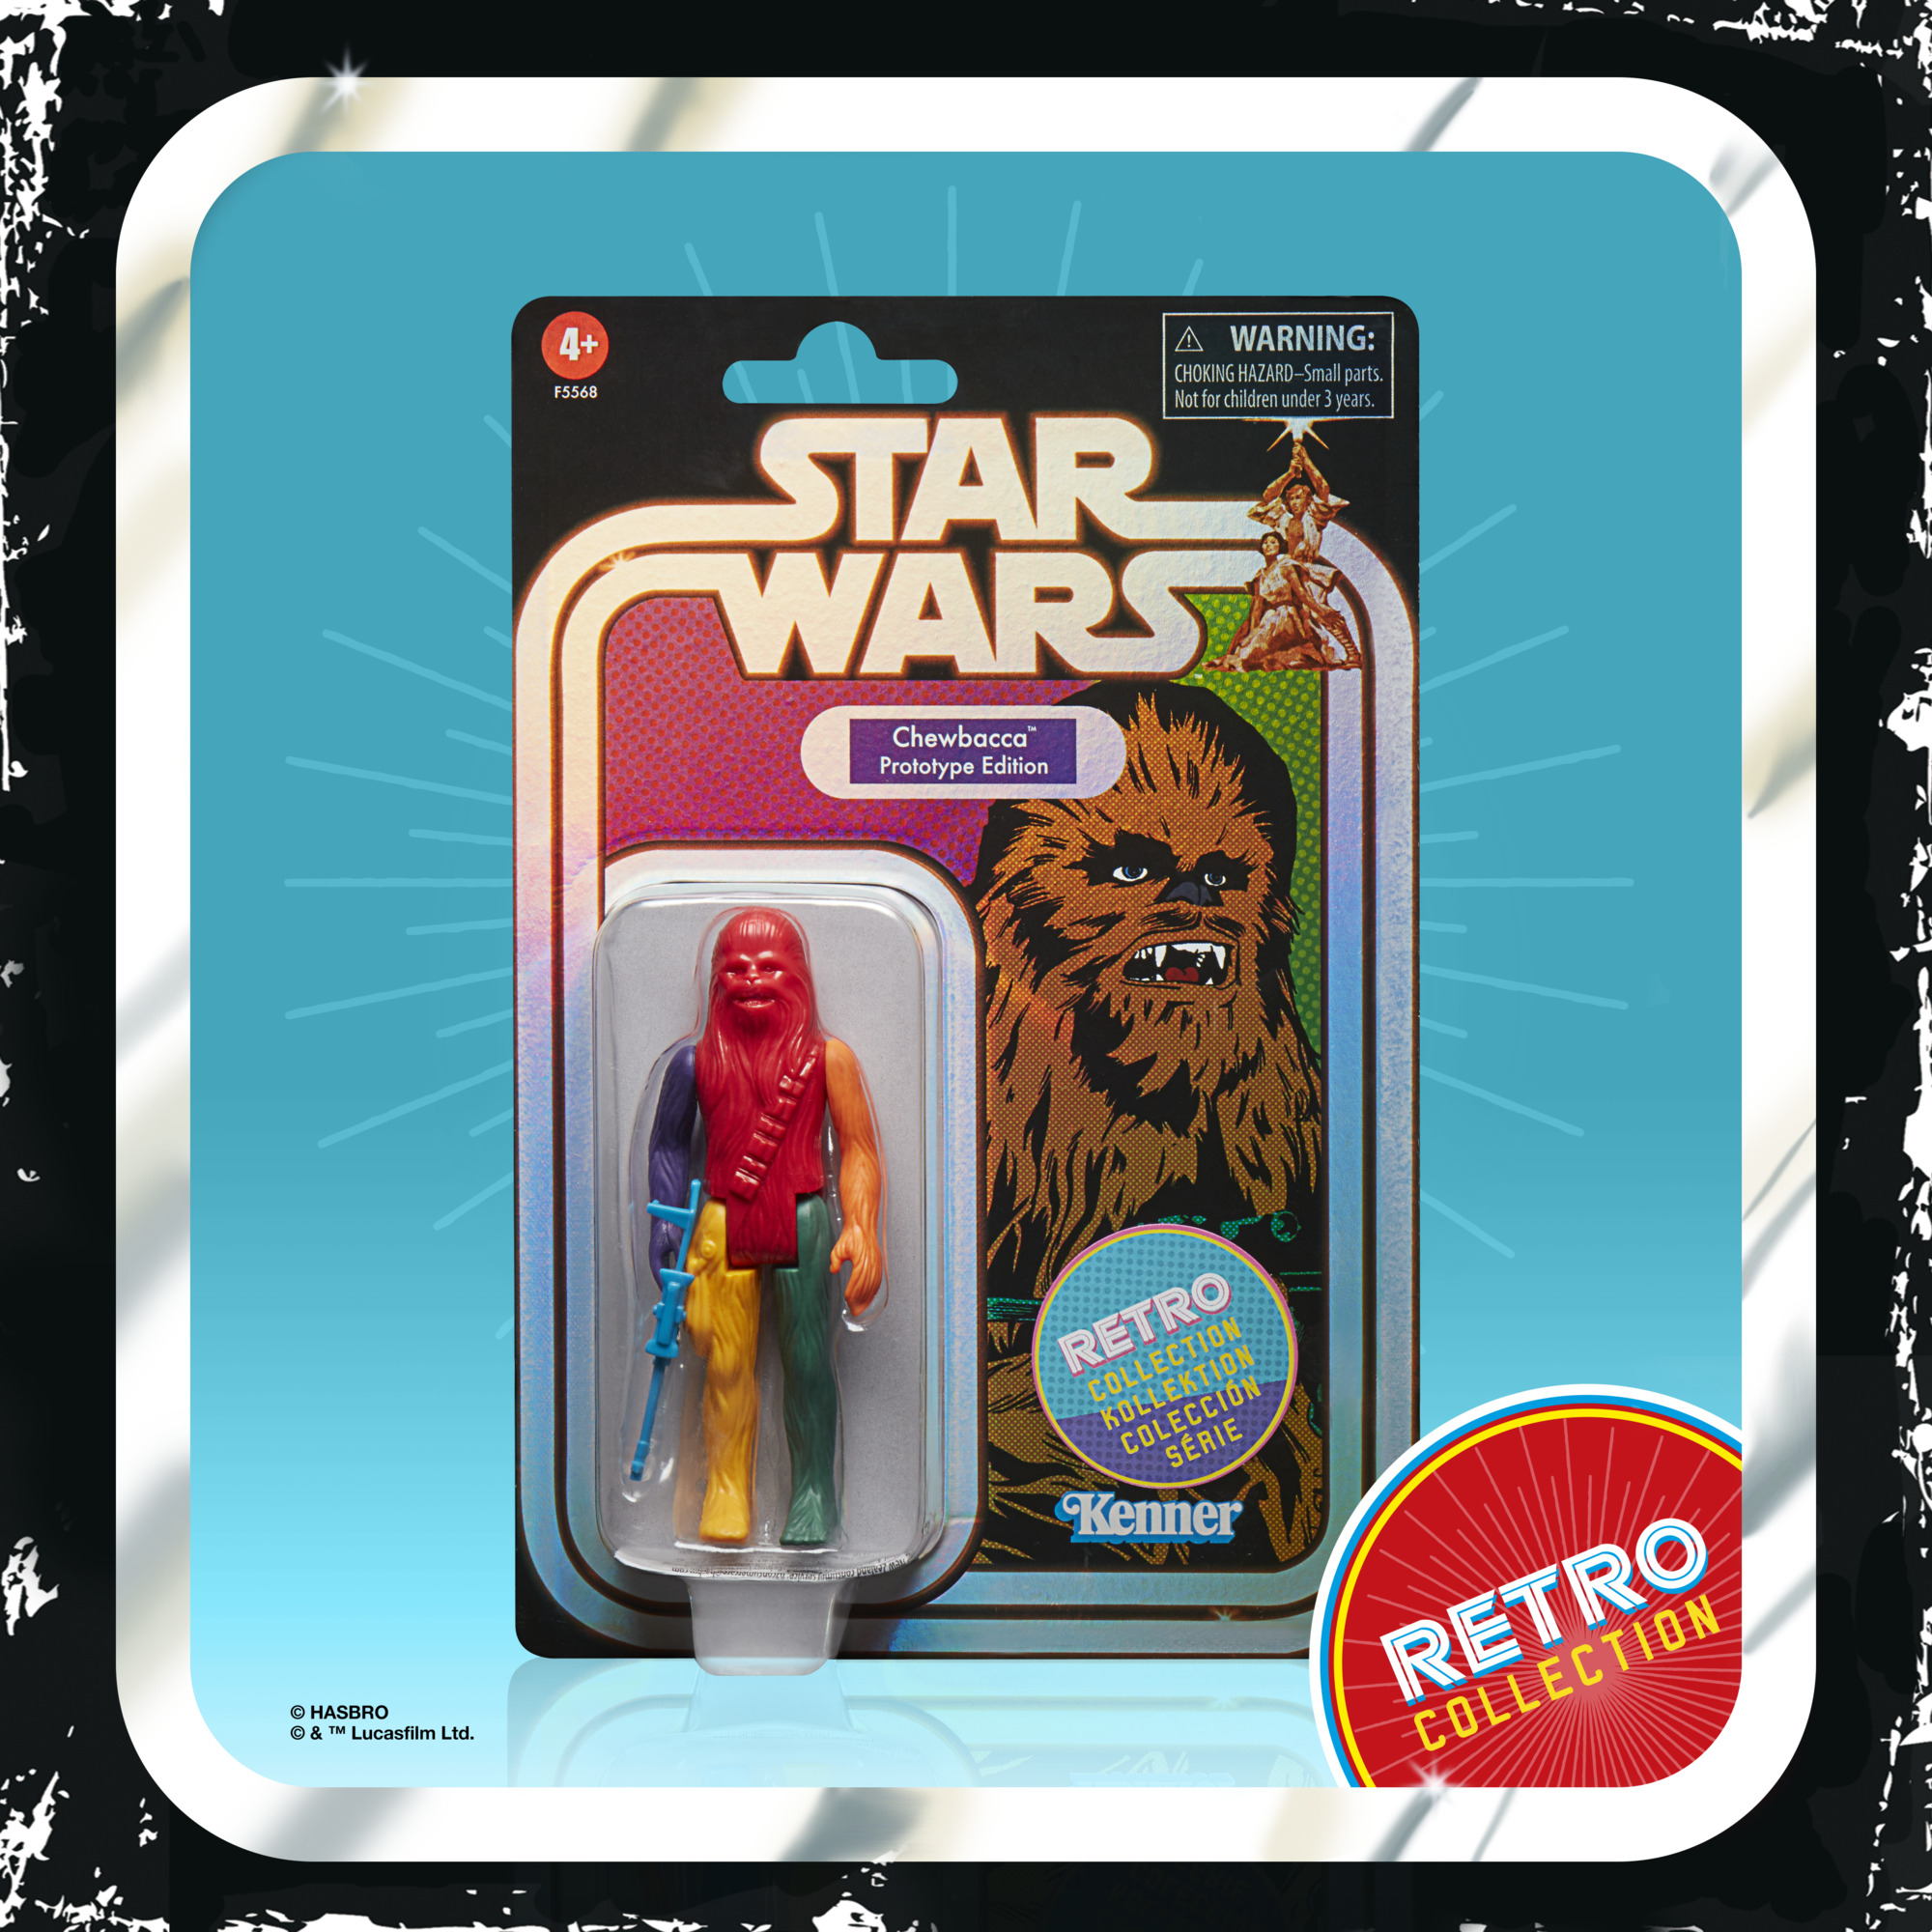 Star Wars Retro Collection Chewbacca Prototype Edition F55685L00 5010994144968